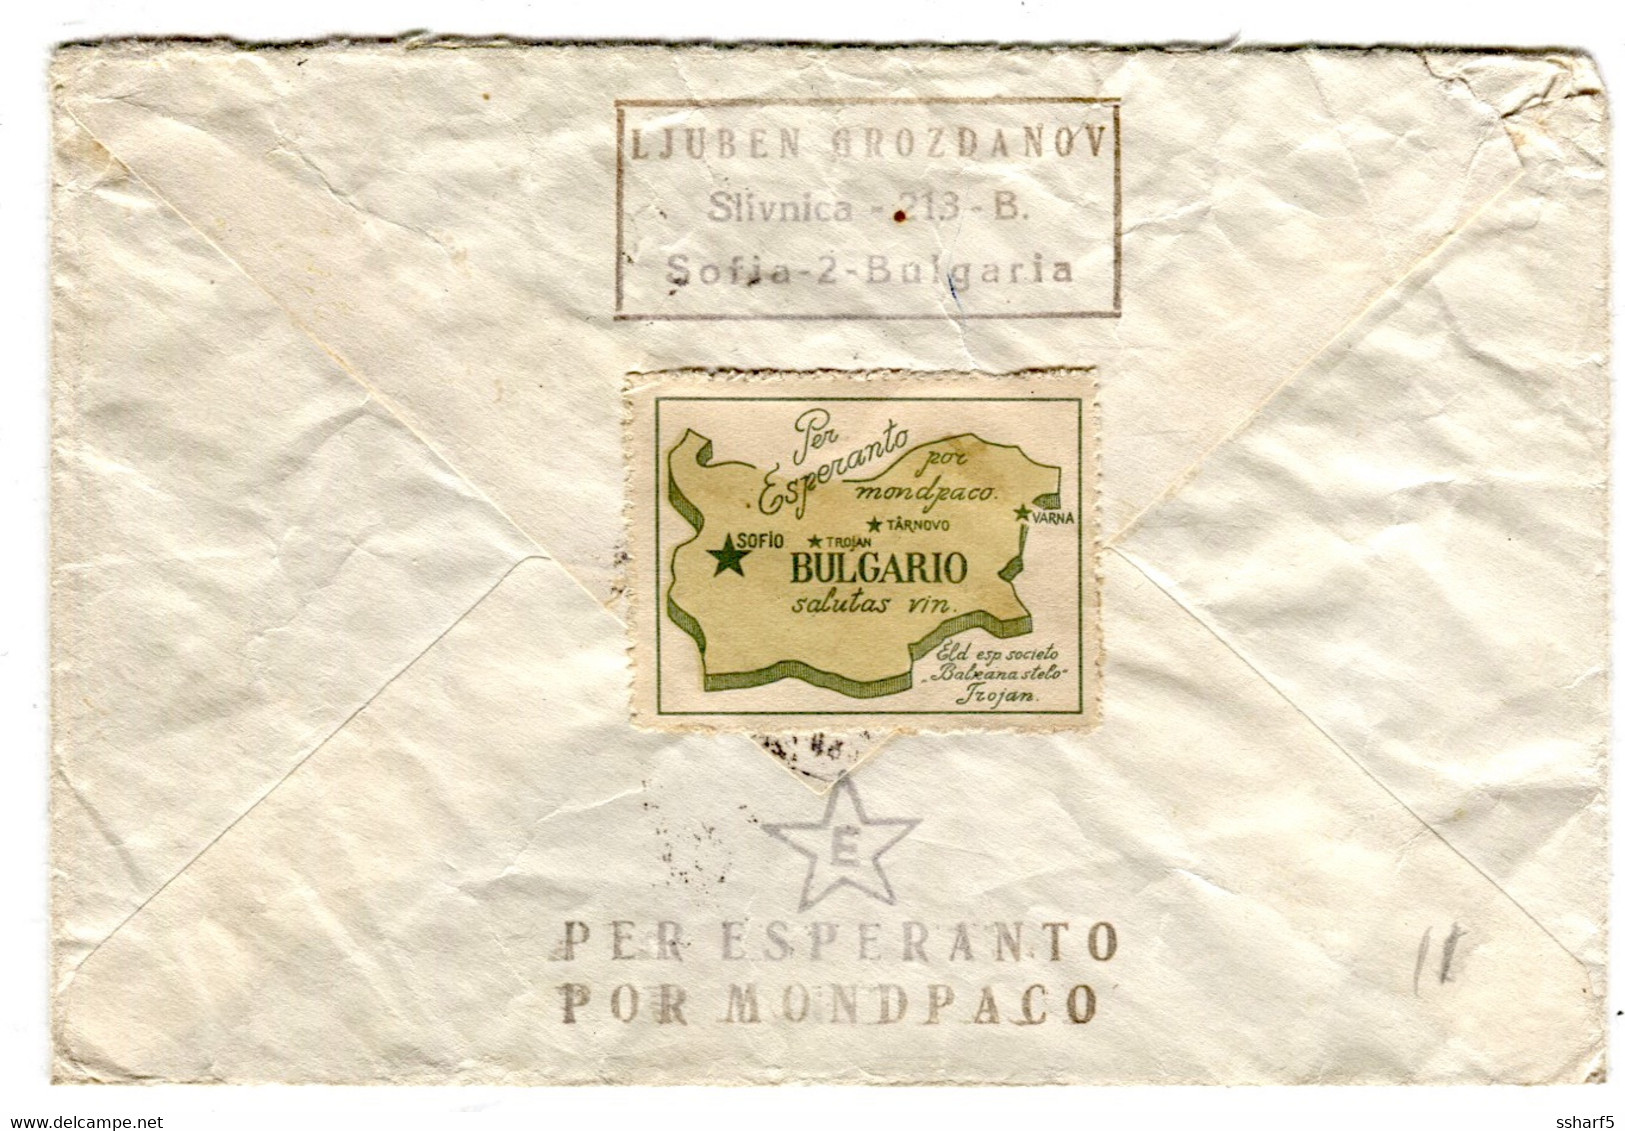 ESPERANTO BULGARIA 1959 Label Bulgario SALUTAS VIN With Map Of Bulgaria On Interesting Postal Stationery Cover - Esperanto